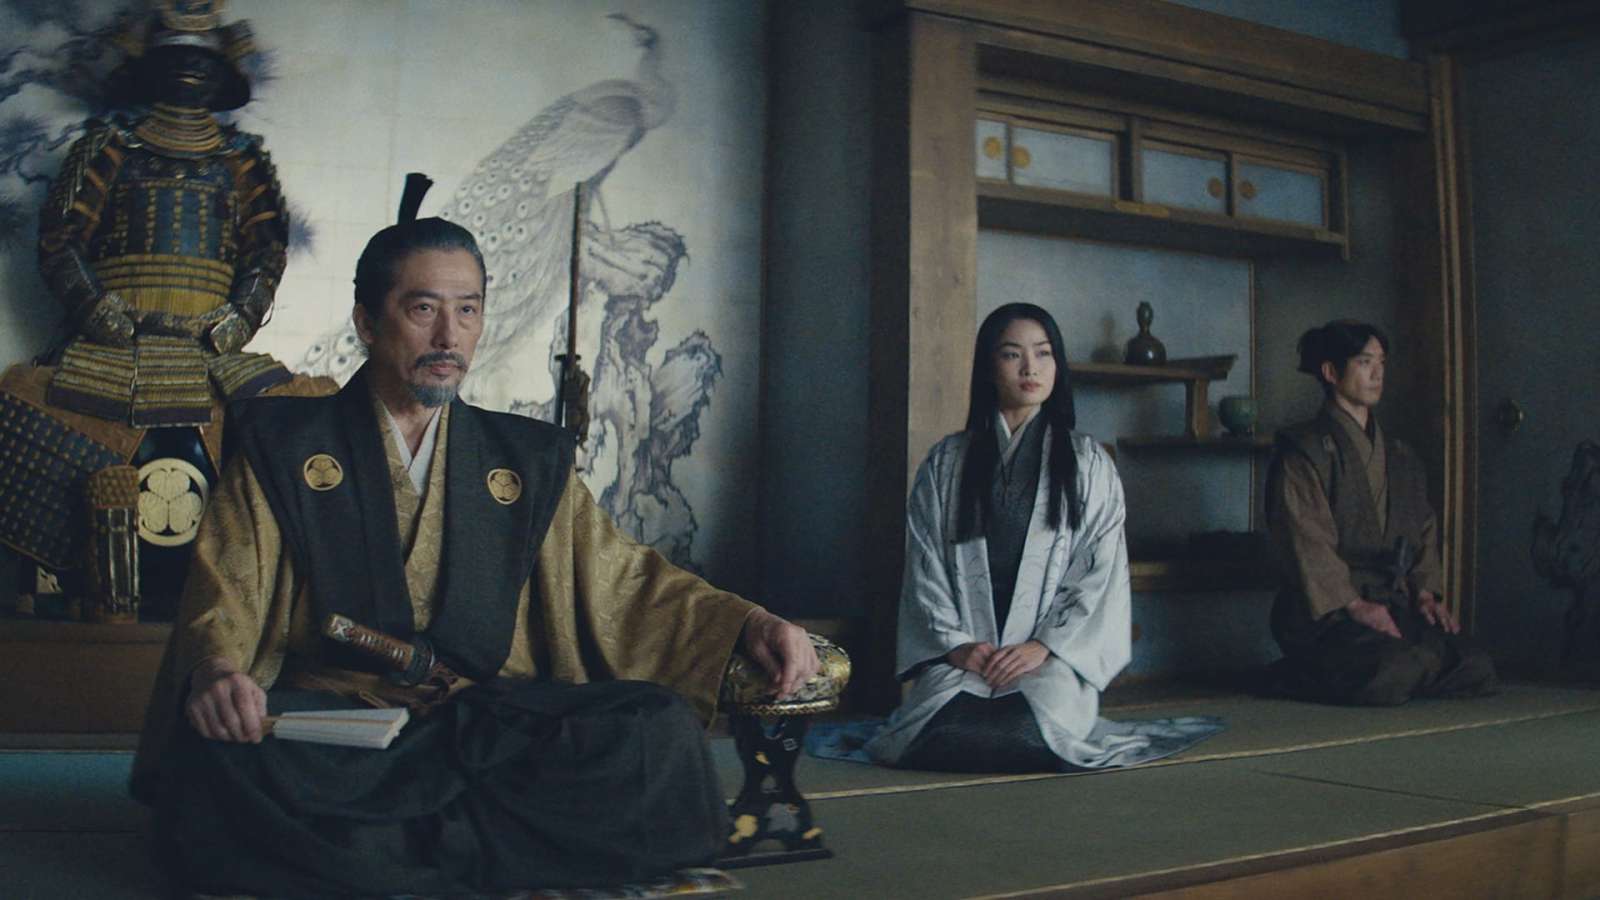 Shogun : Servants of Two Masters